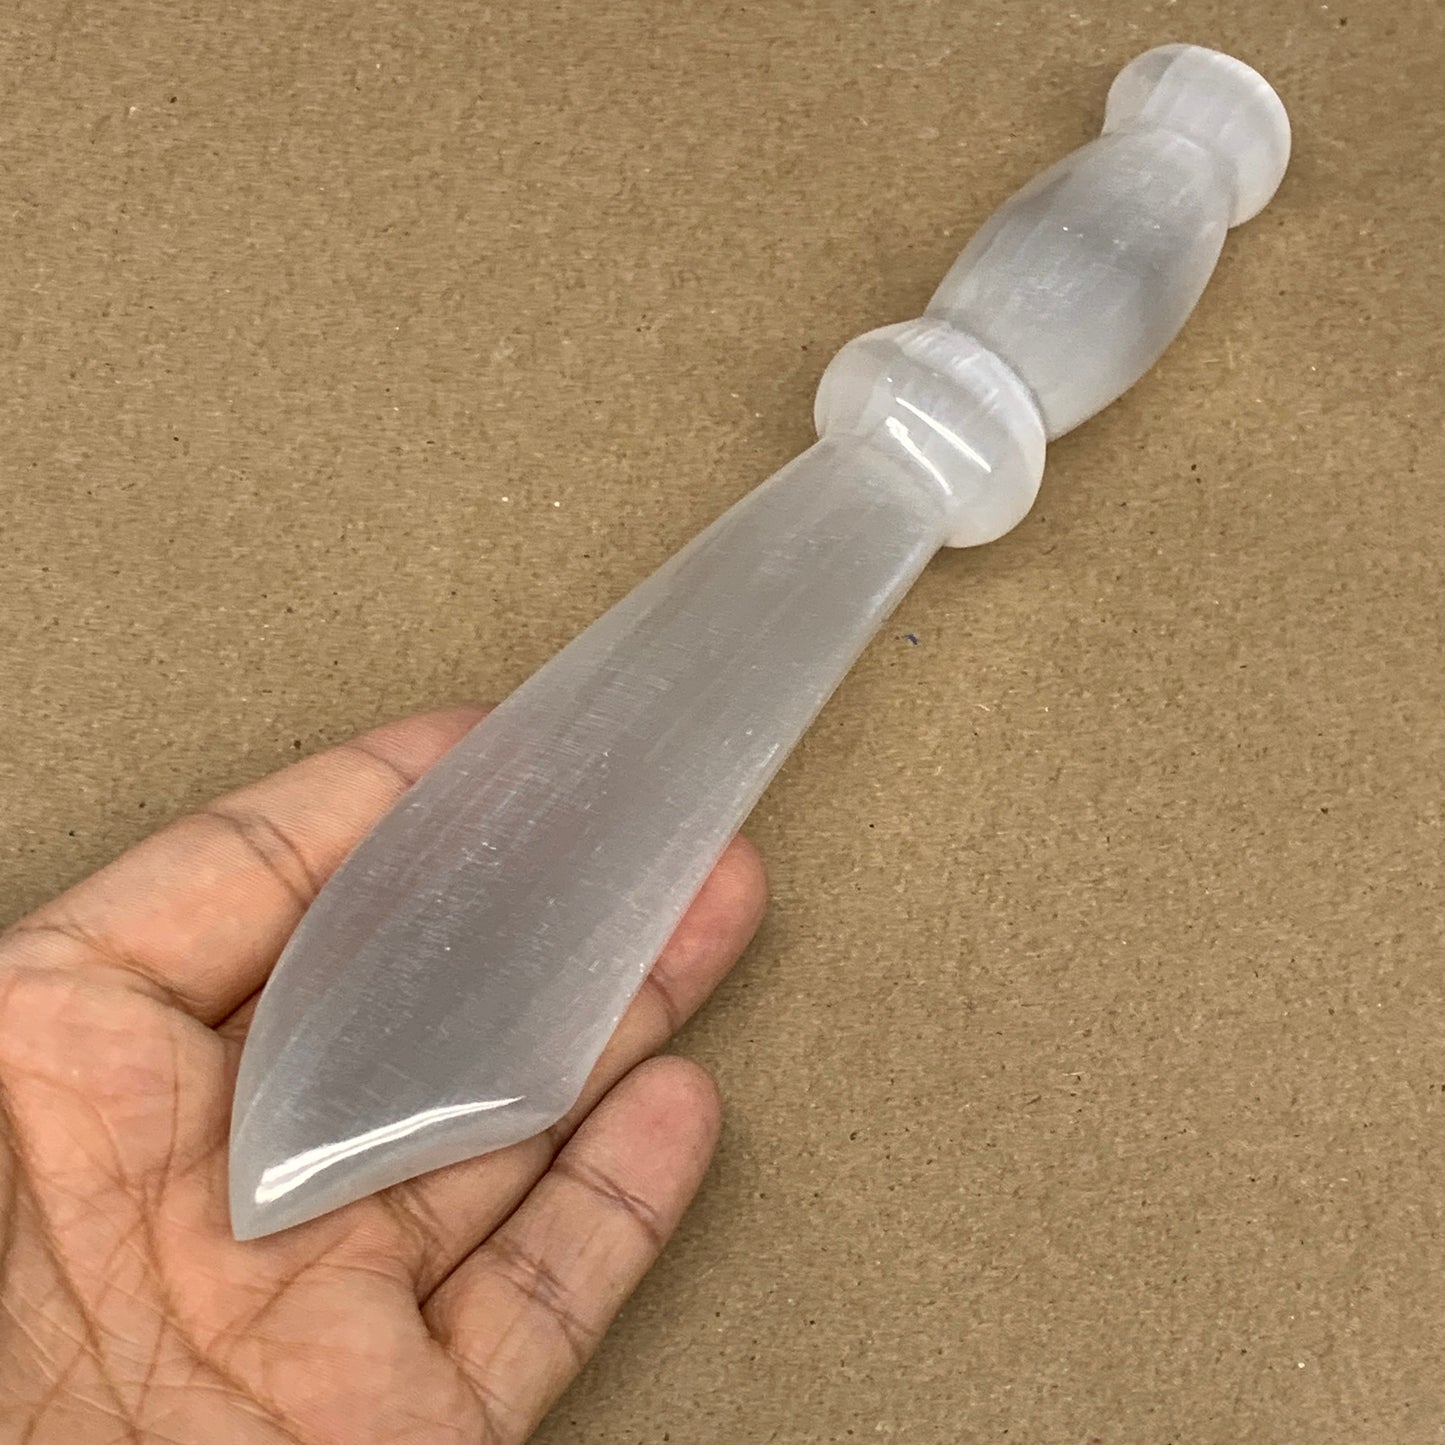 187.2g,8.5"x1.3"x0.9"Natural Selenite Crystal Knife (Satin Spar) @Morocco,B9186